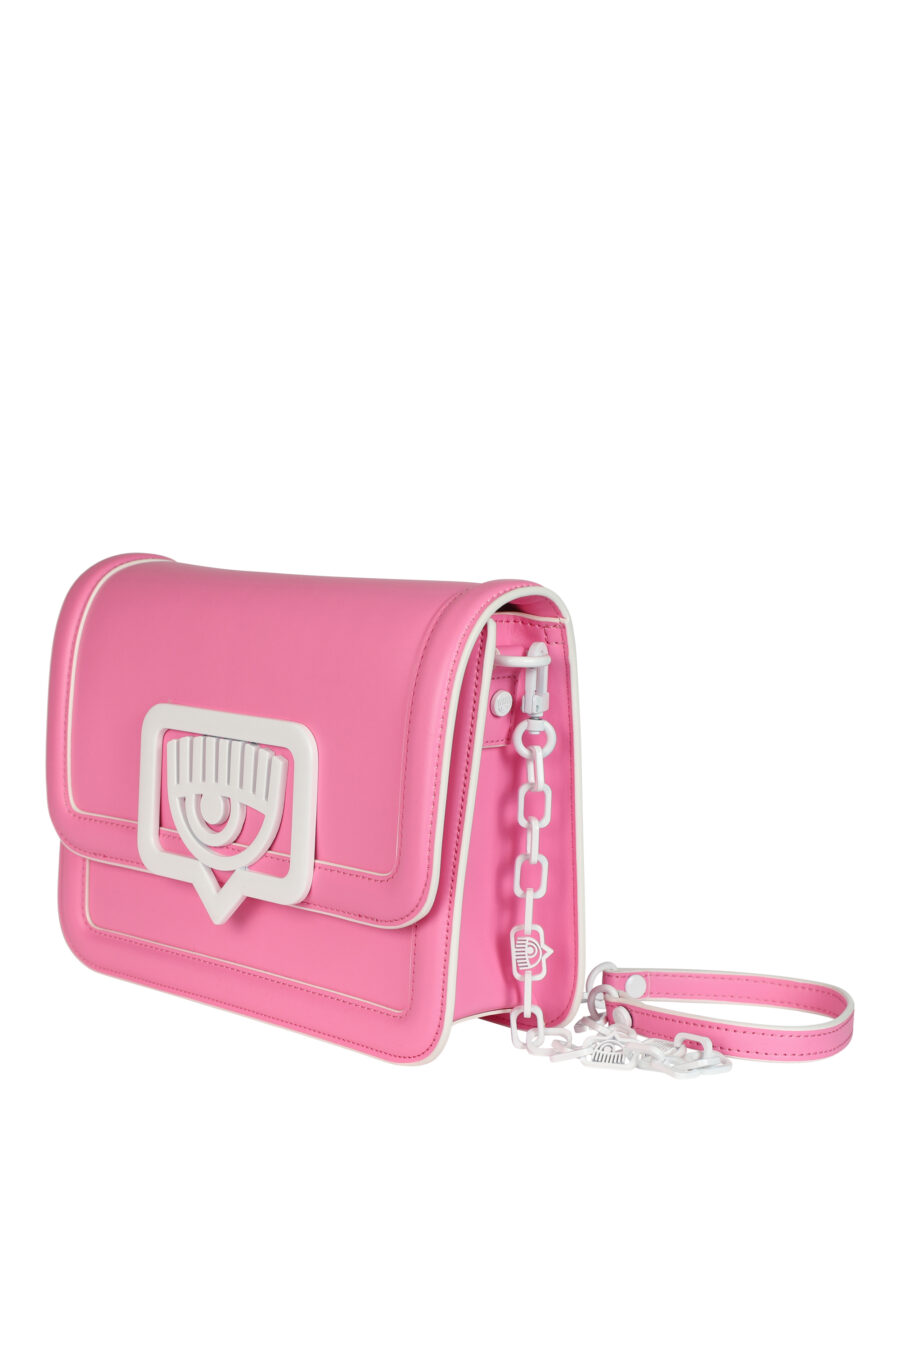 Pink shoulder bag with metal eye logo - 8052672351548 2